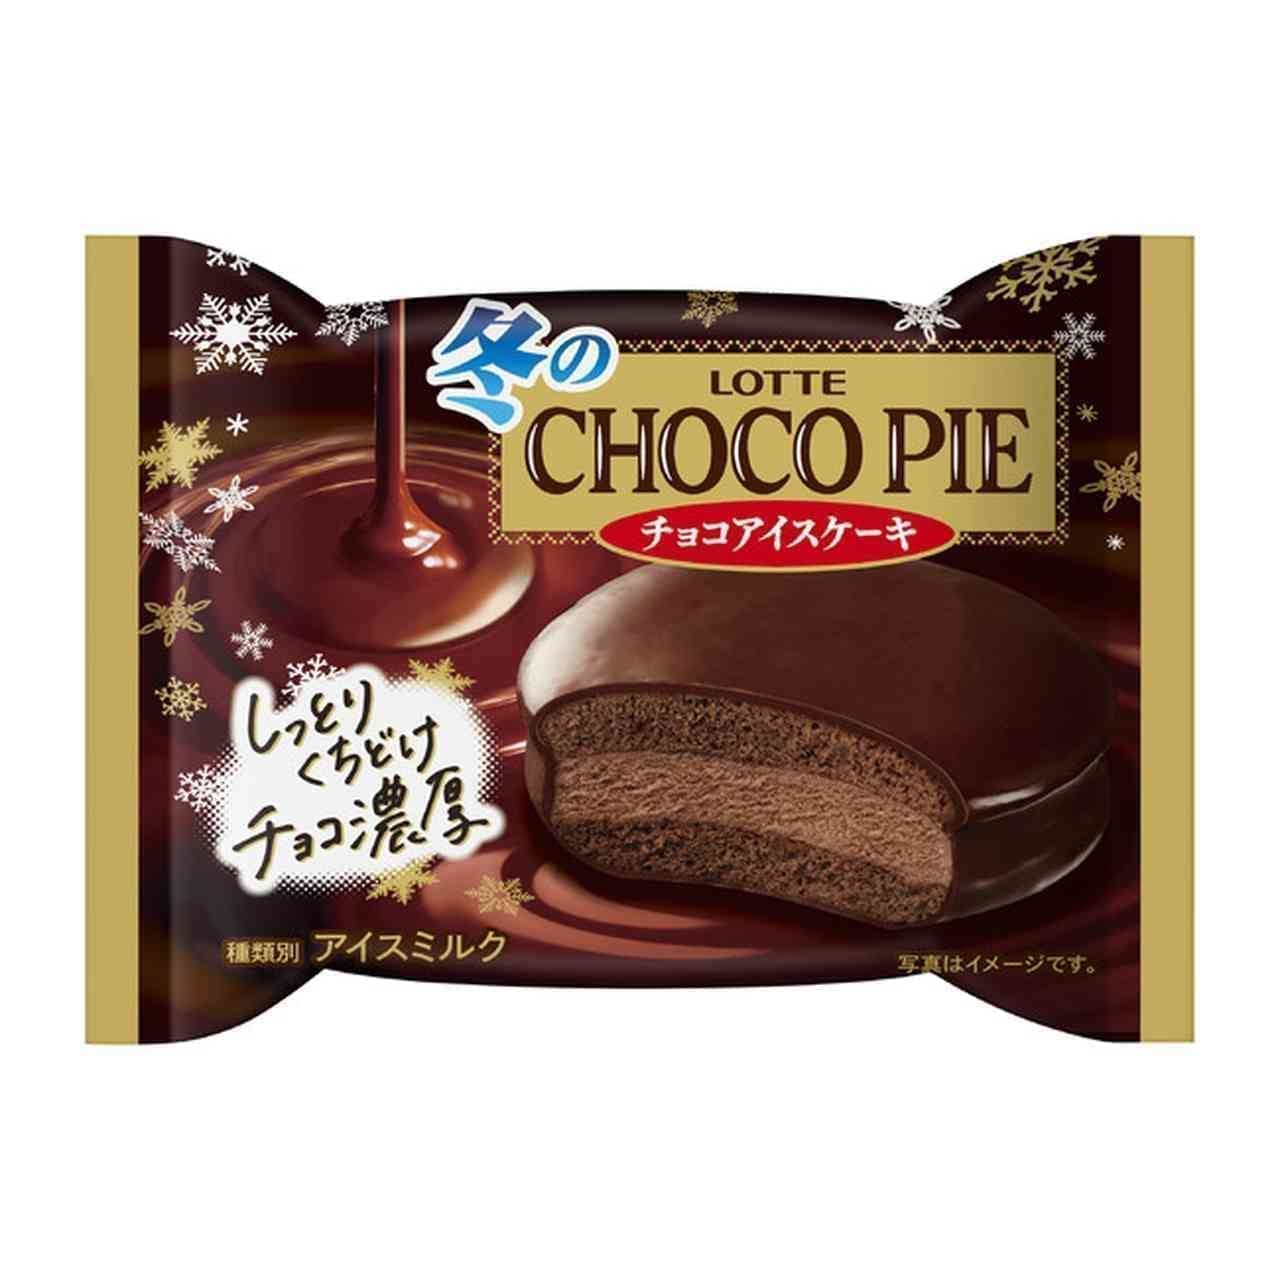 Lotte "Winter Choco Pie Ice"